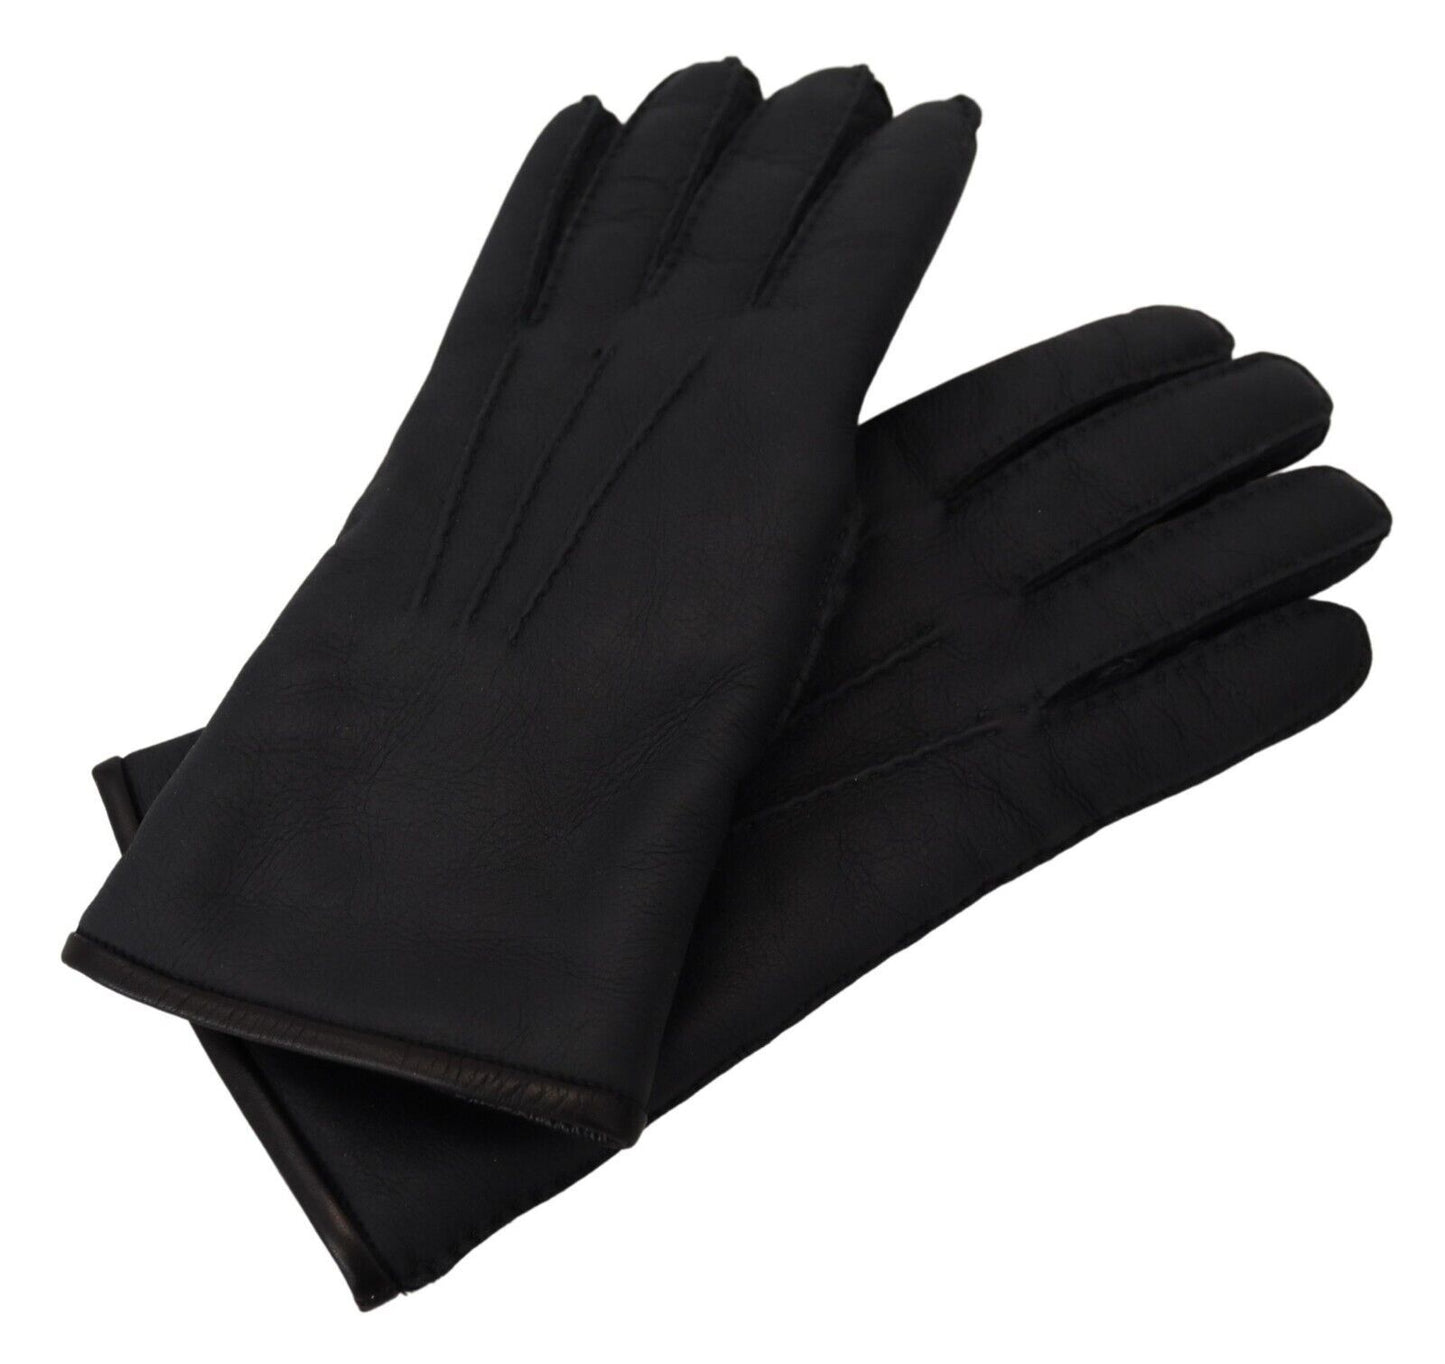 Dolce & Gabbana Elegant Black Leather Winter Gloves